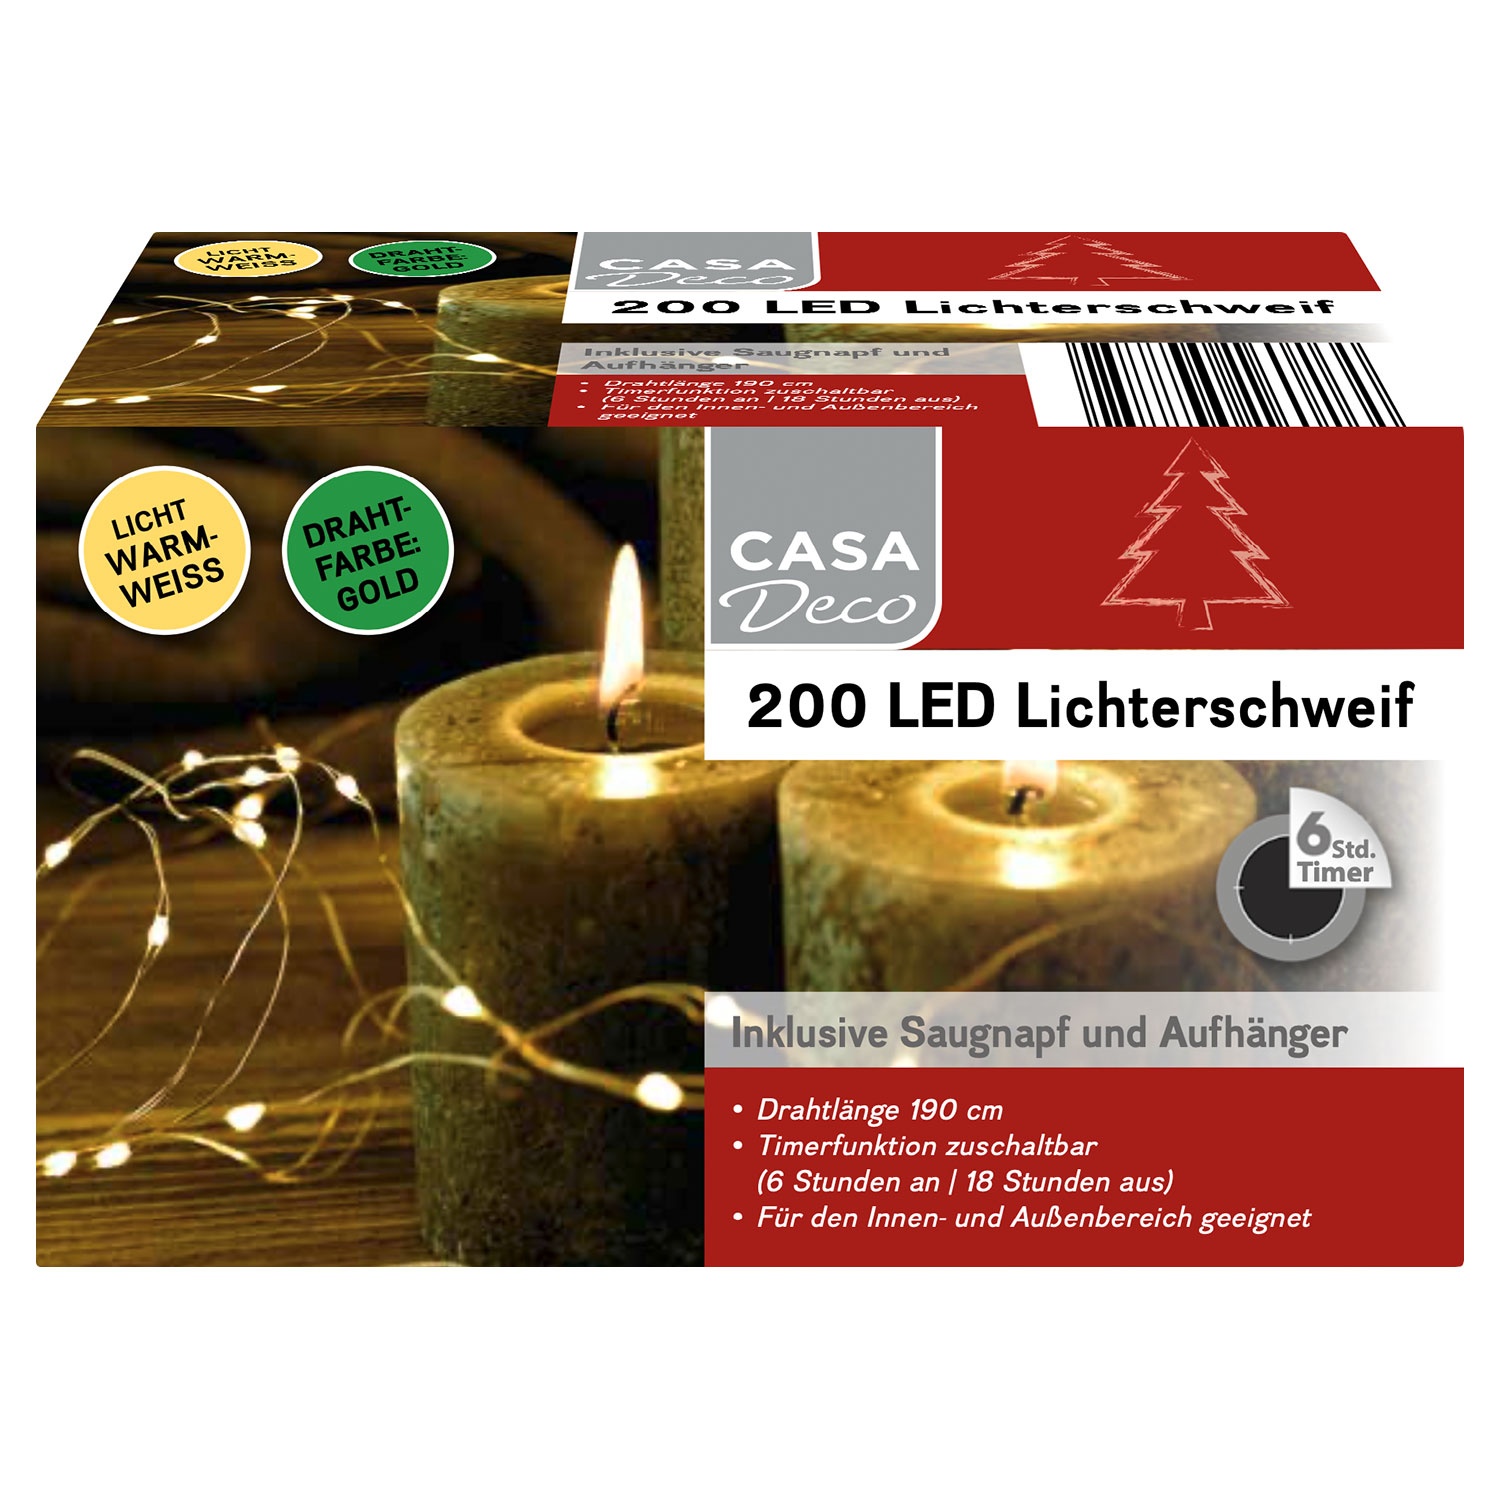 CASA DECO 200-LED-Lichterschweif